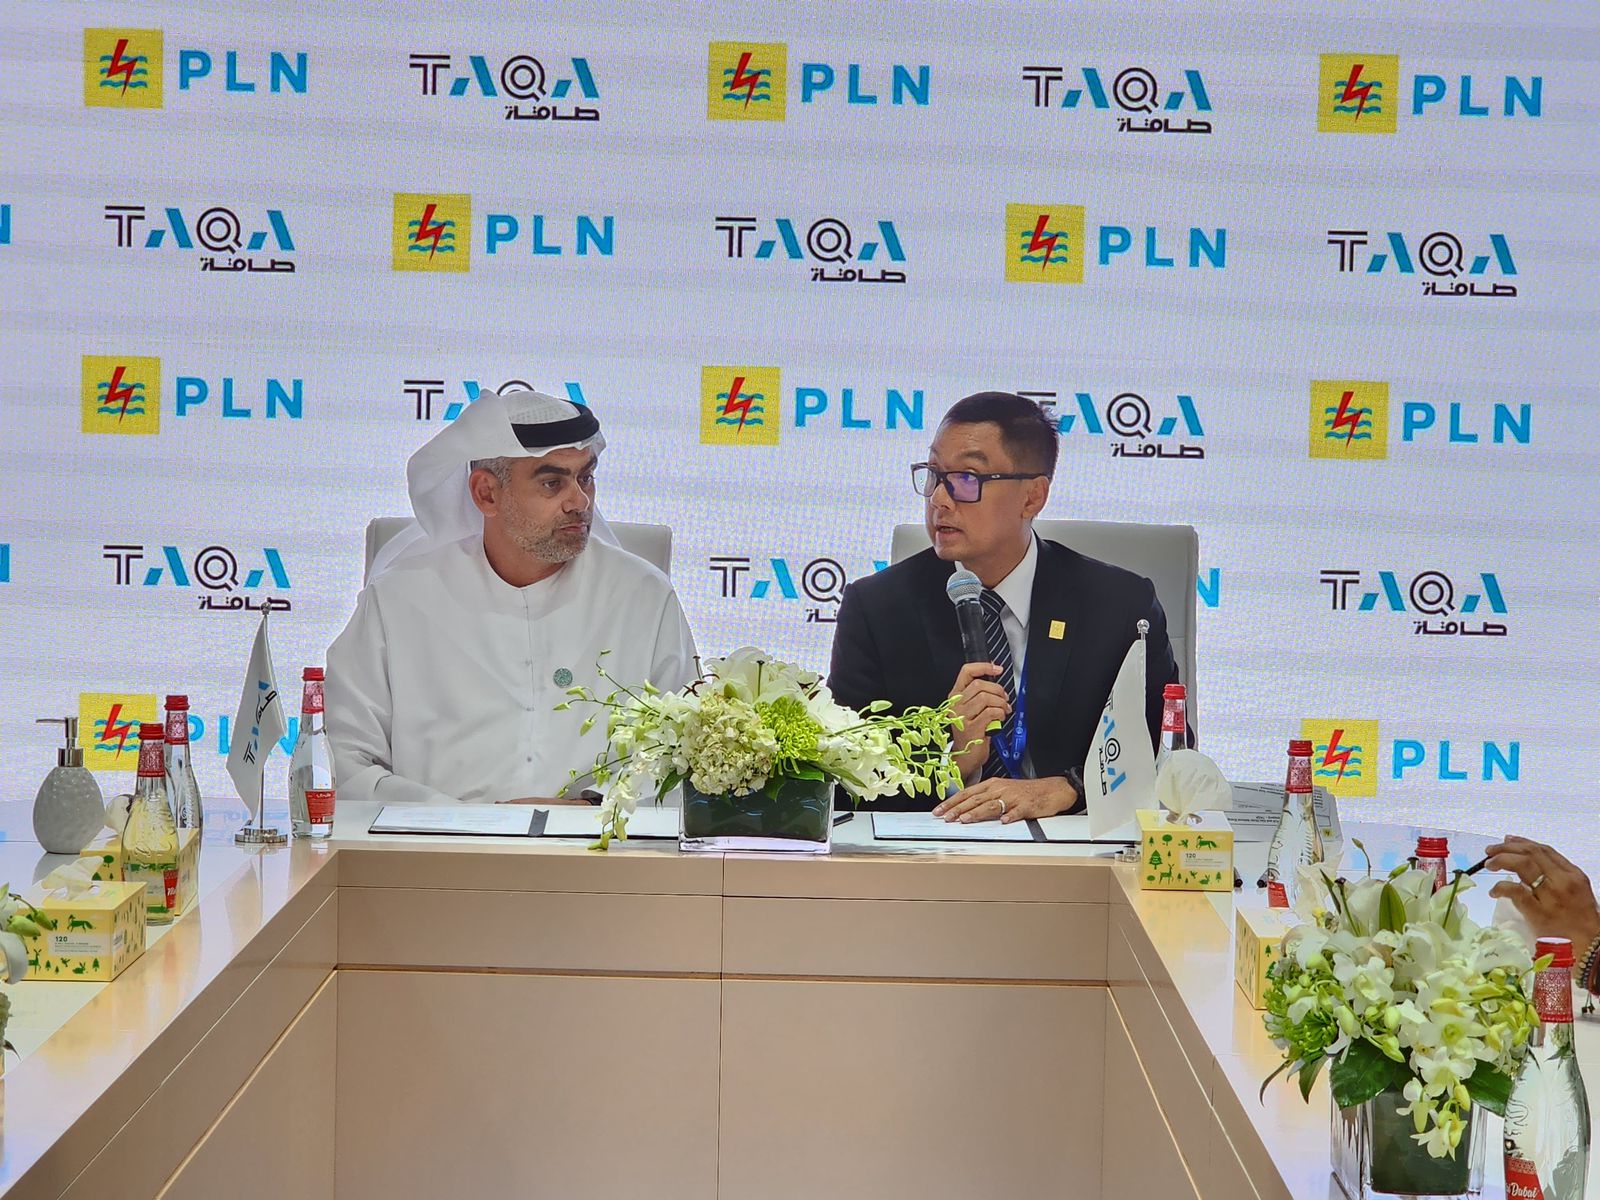 Direktur Utama PLN, Darmawan Prasodjo (kanan) saat memberikan sambutannya didampingi oleh TAQA’s Group CEO and Managing Director Jasim Husain Thabet (kiri) dalam penandatanganan MoU kerjasama antara PLN dan TAQA, di sela agenda COP28 di Dubai, Uni Emirat Arab (UEA) pada Senin (4/12/2023). FOTO: DOK PLN